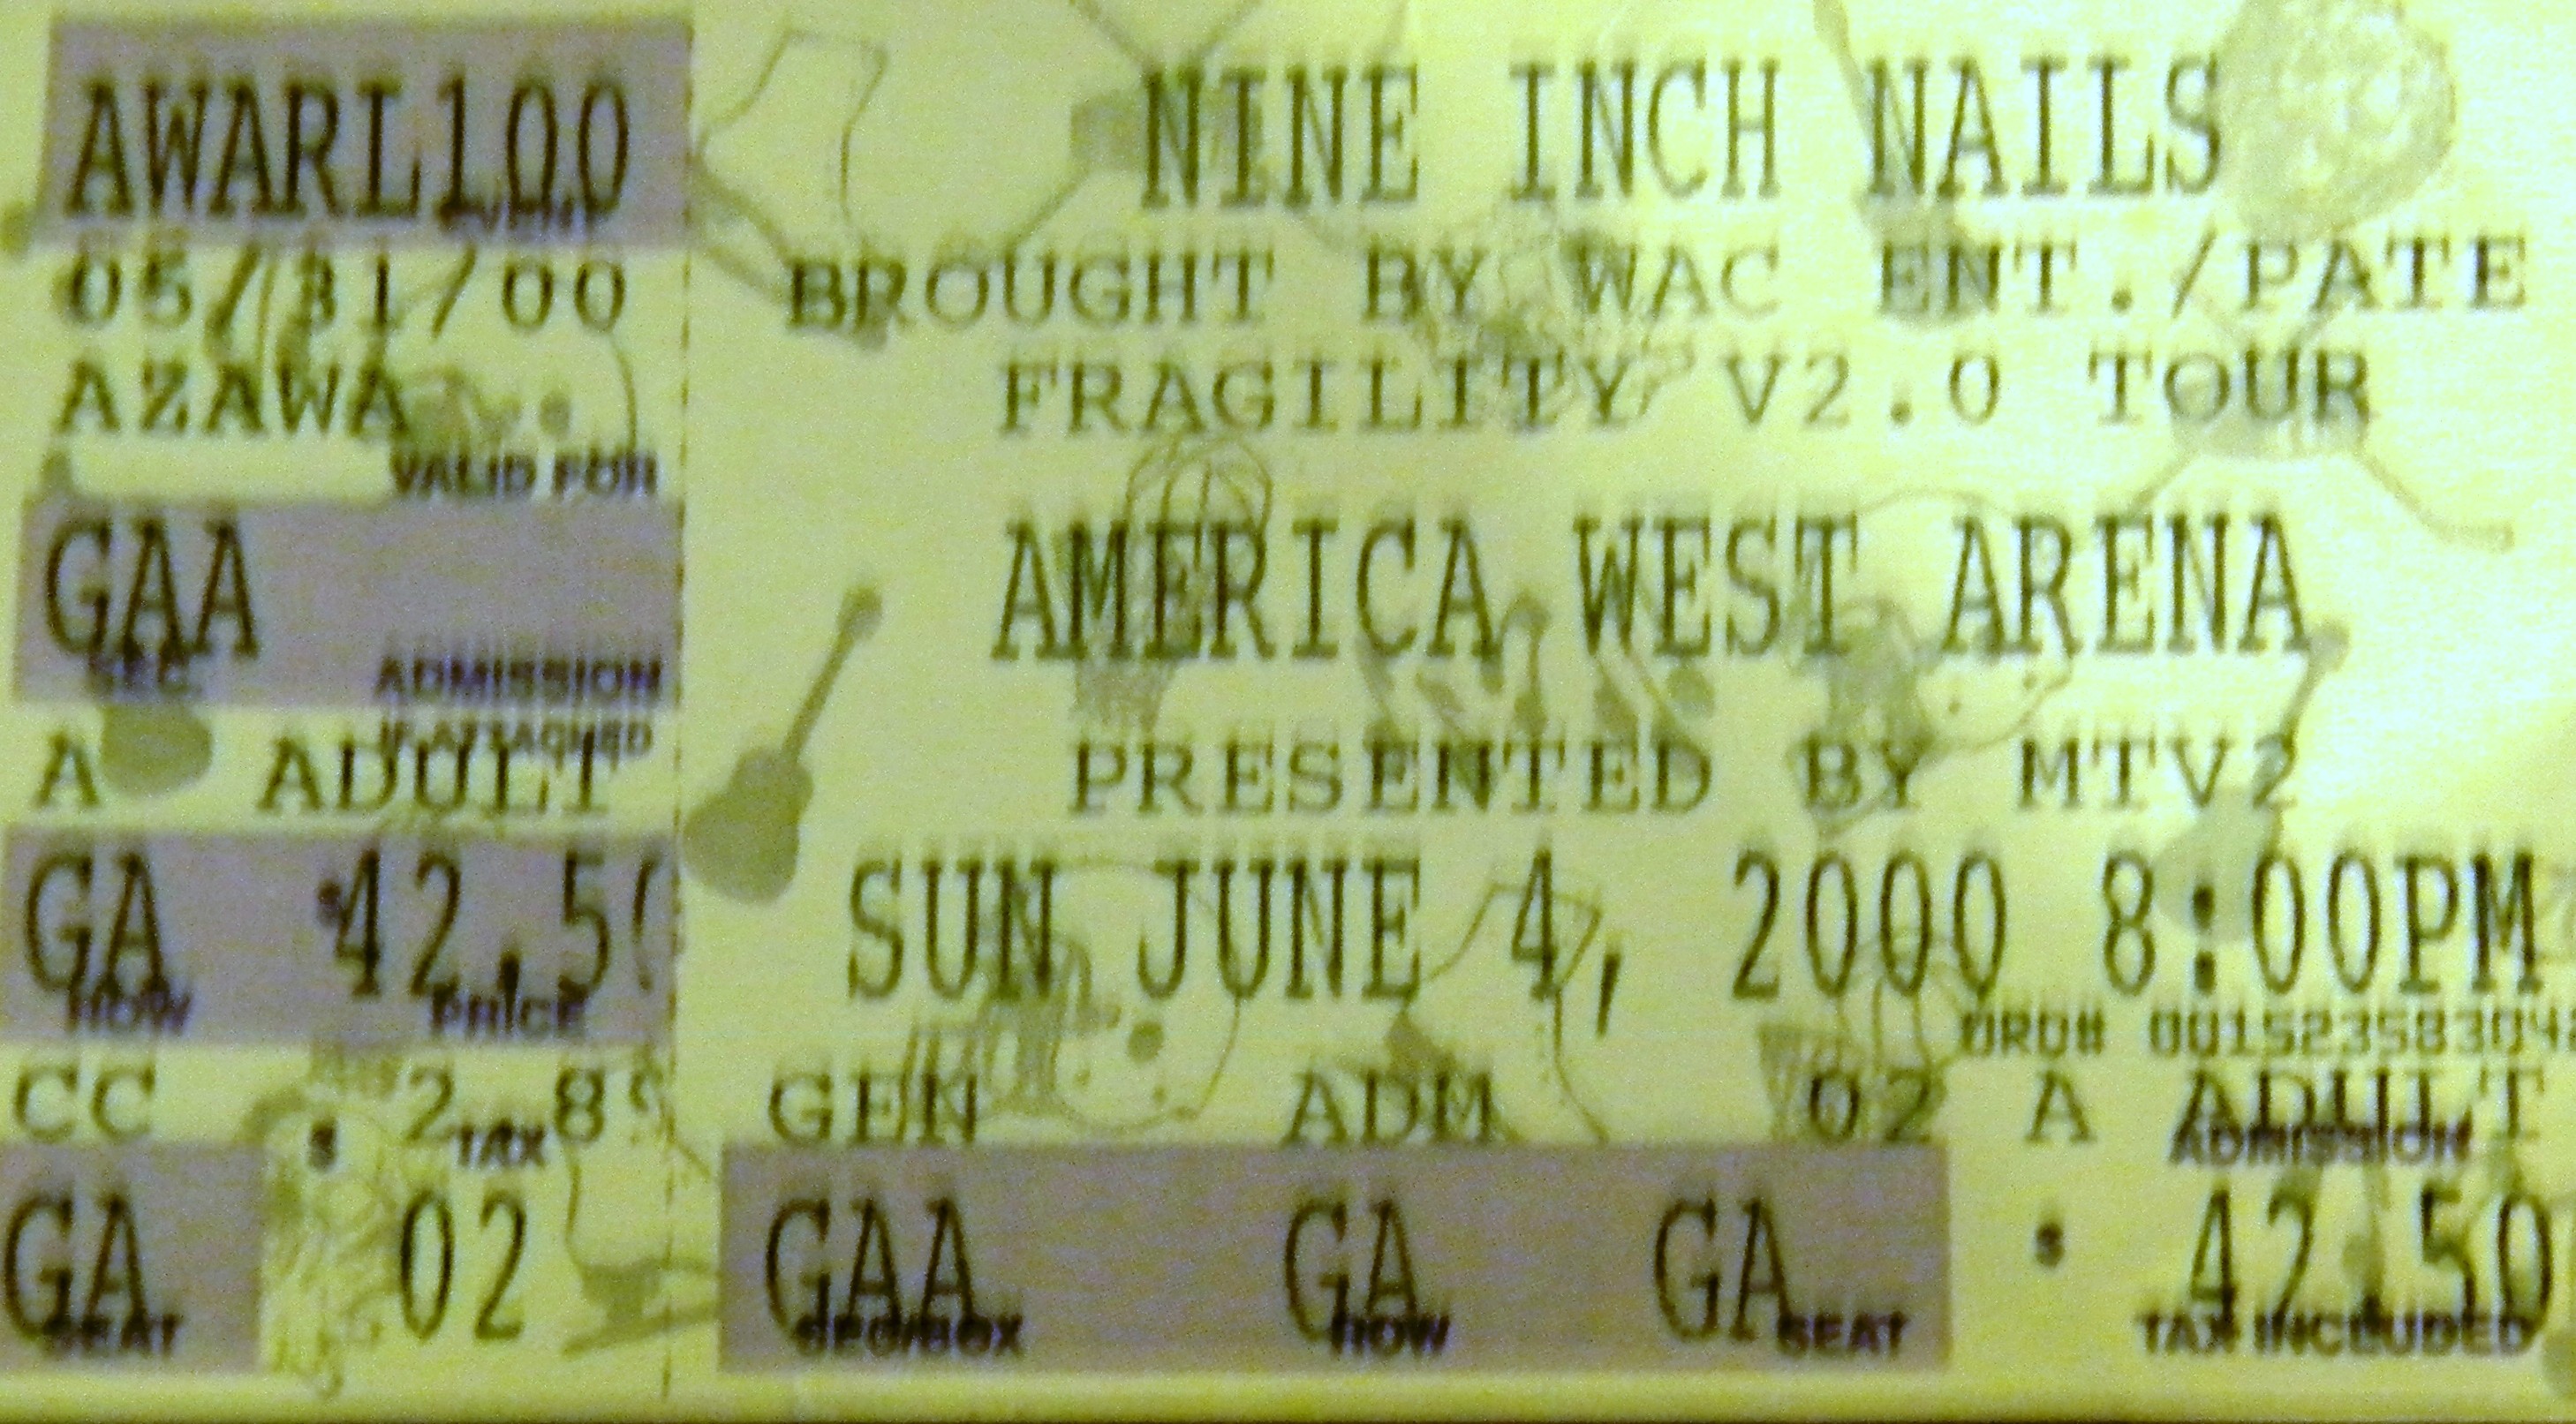 2000/06/04 Ticket